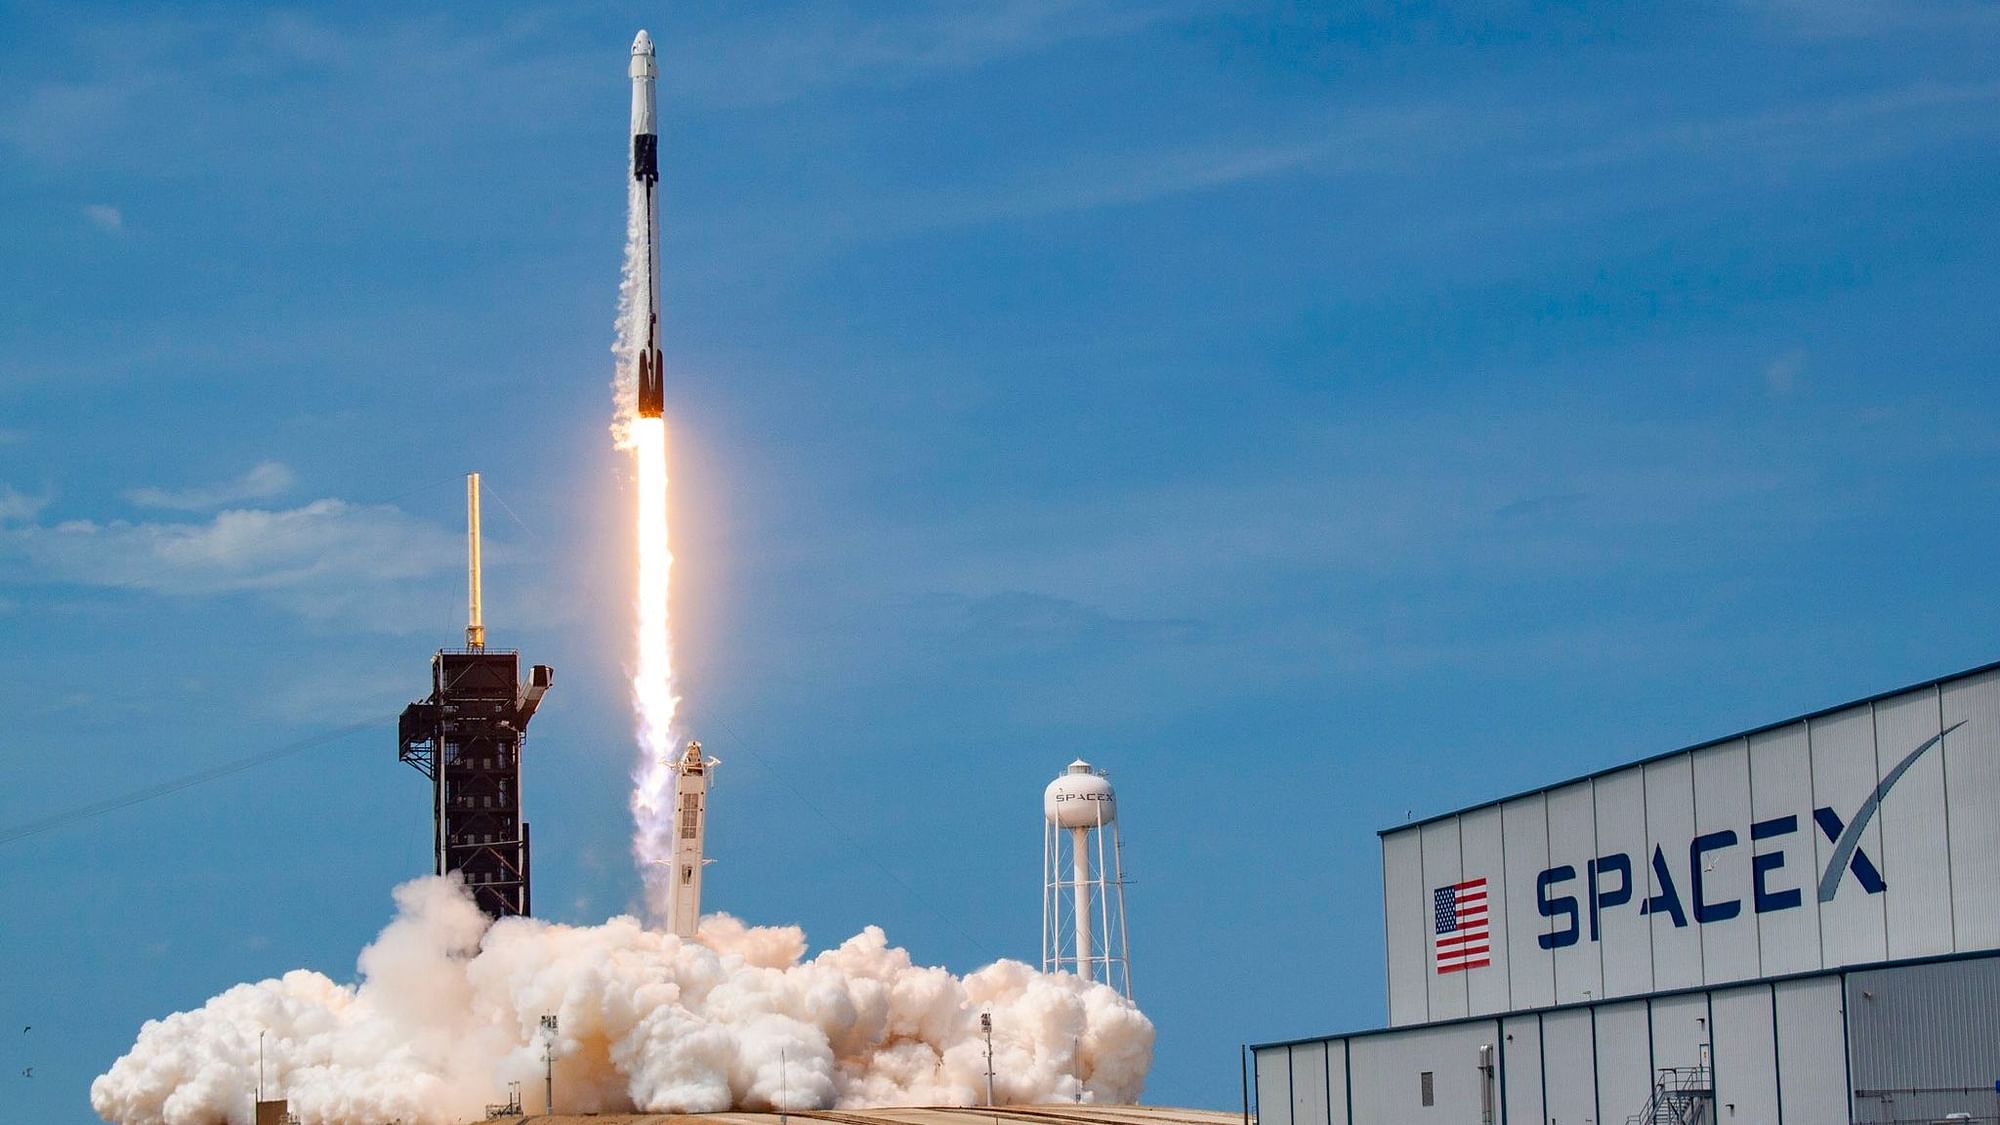 दो अमेरिकी एस्ट्रोनॉट्स को लेकर स्पेस रवाना रॉकेट फैल्कन 9